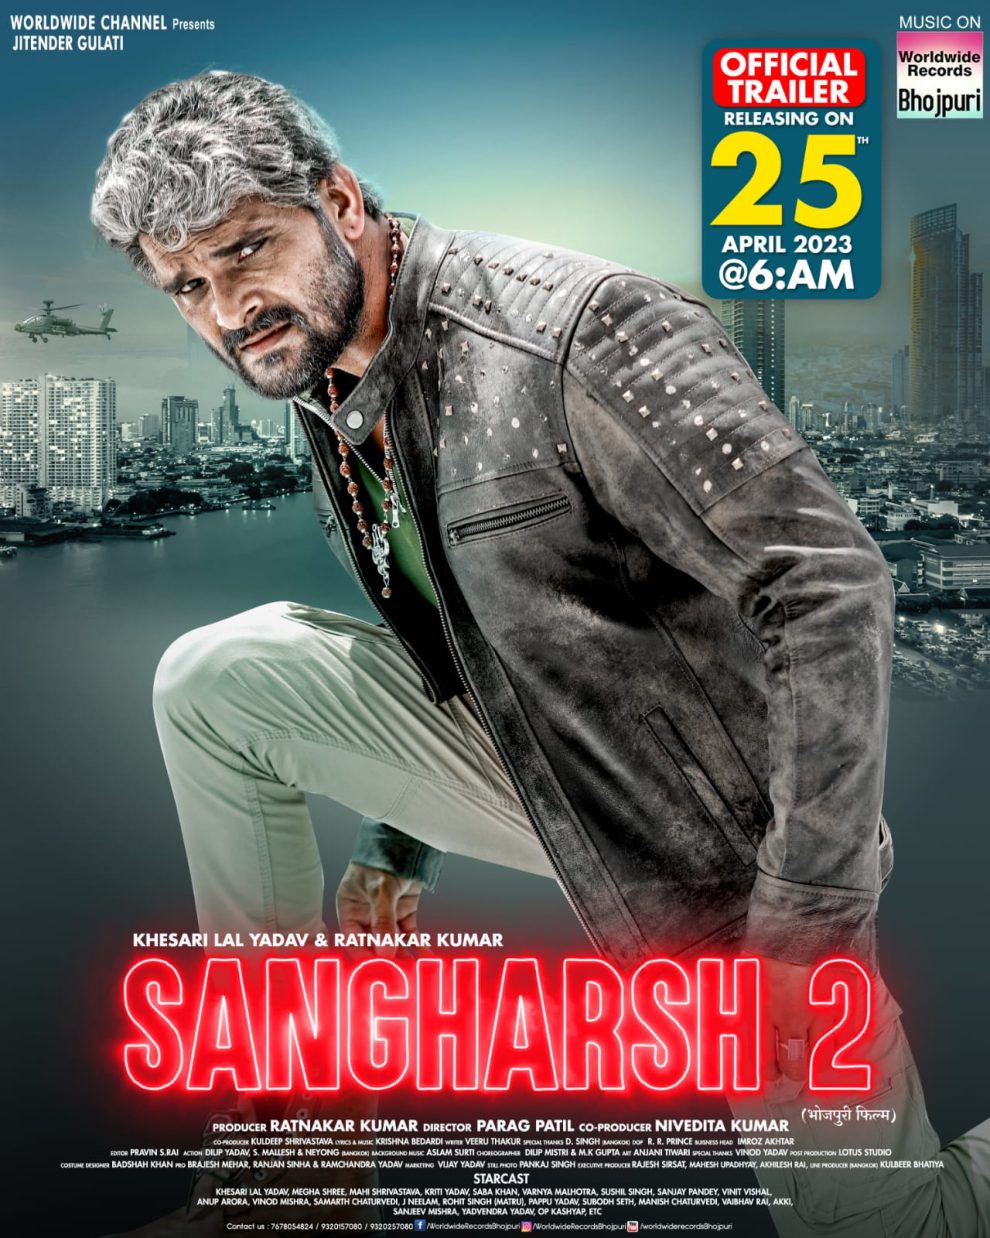 Trailer of producer Ratnakar Kumar and Khesari Lal Yadav's Bhojpuri film Sangharsh 2 is coming on 25th April